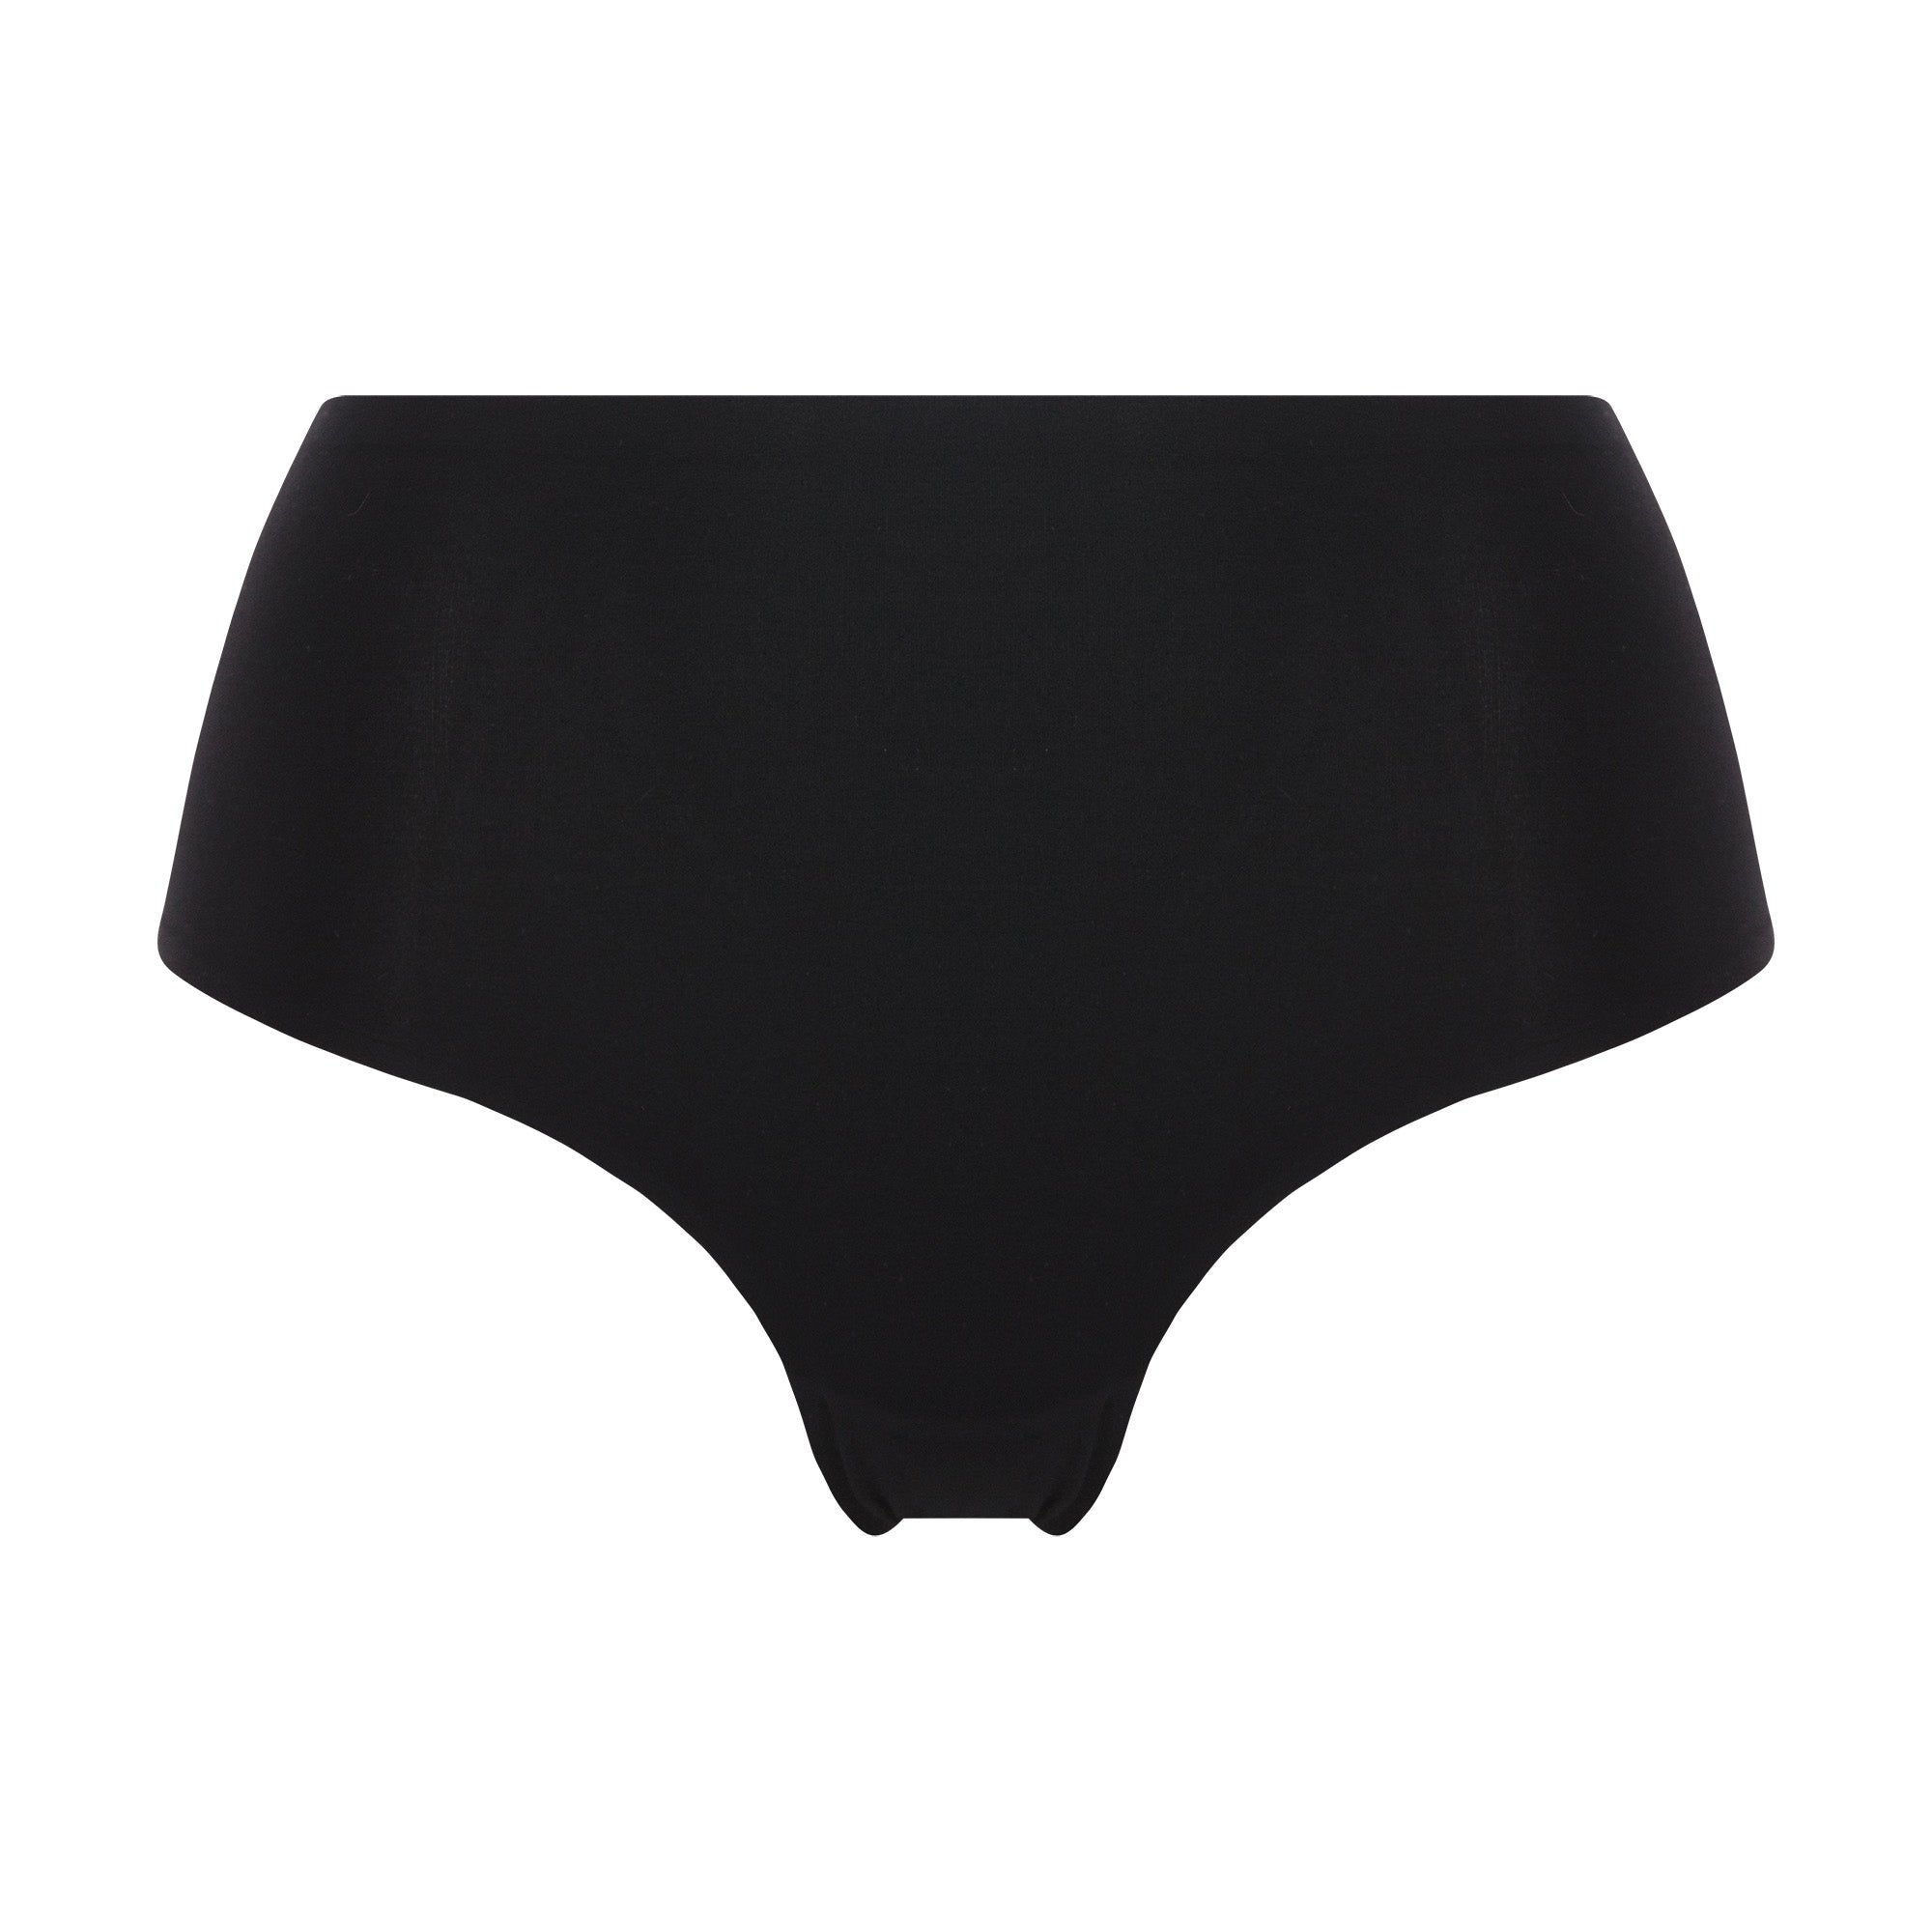 Chantelle Women's Soft Stretch Thong Underwear - Macy's